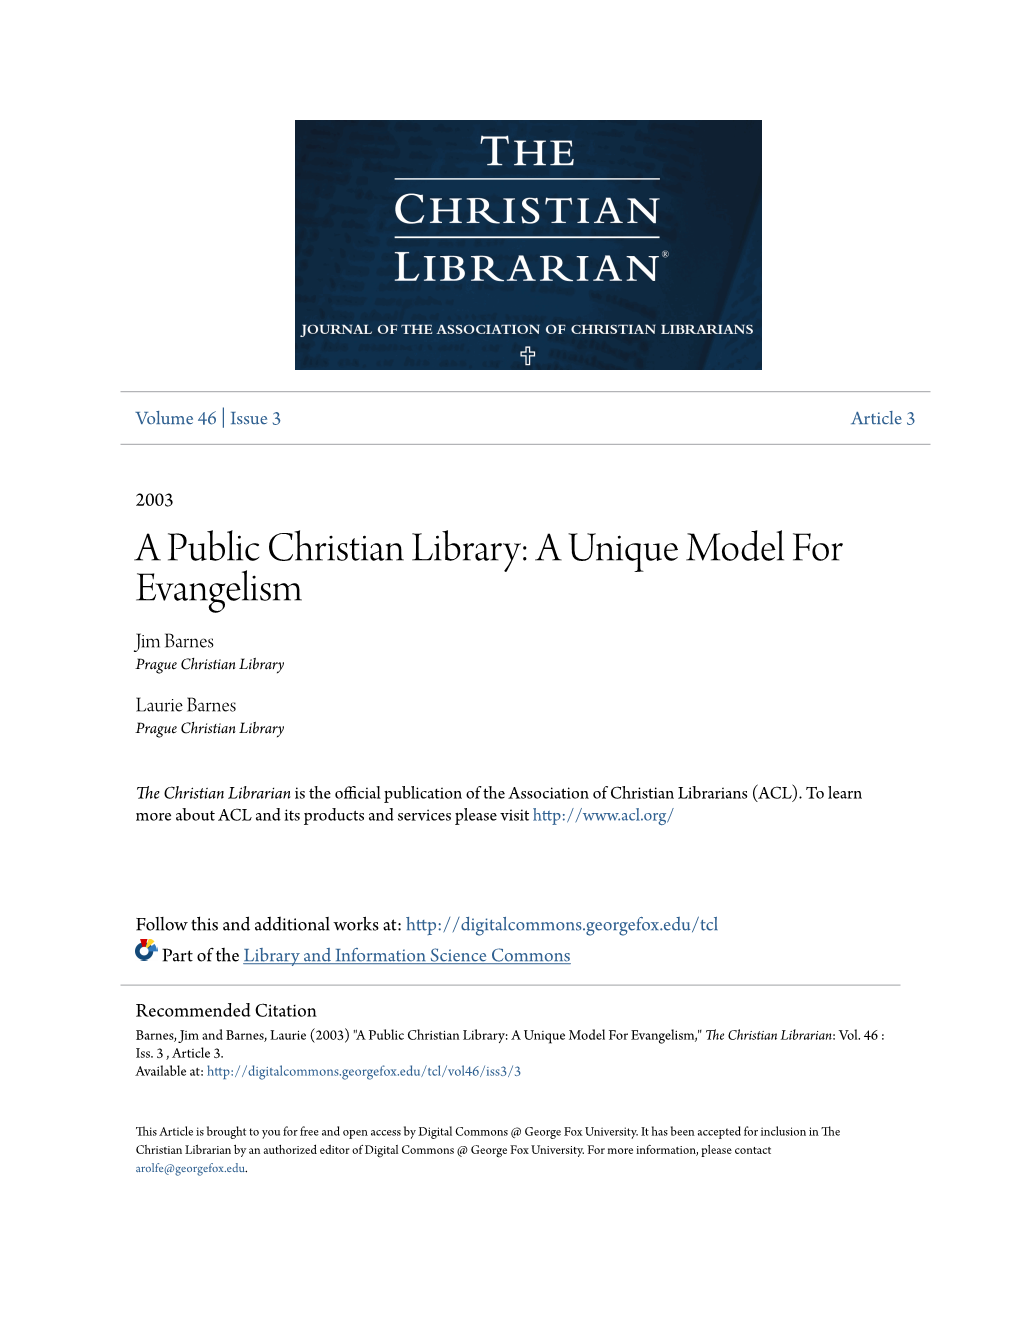 A Public Christian Library: a Unique Model for Evangelism Jim Barnes Prague Christian Library